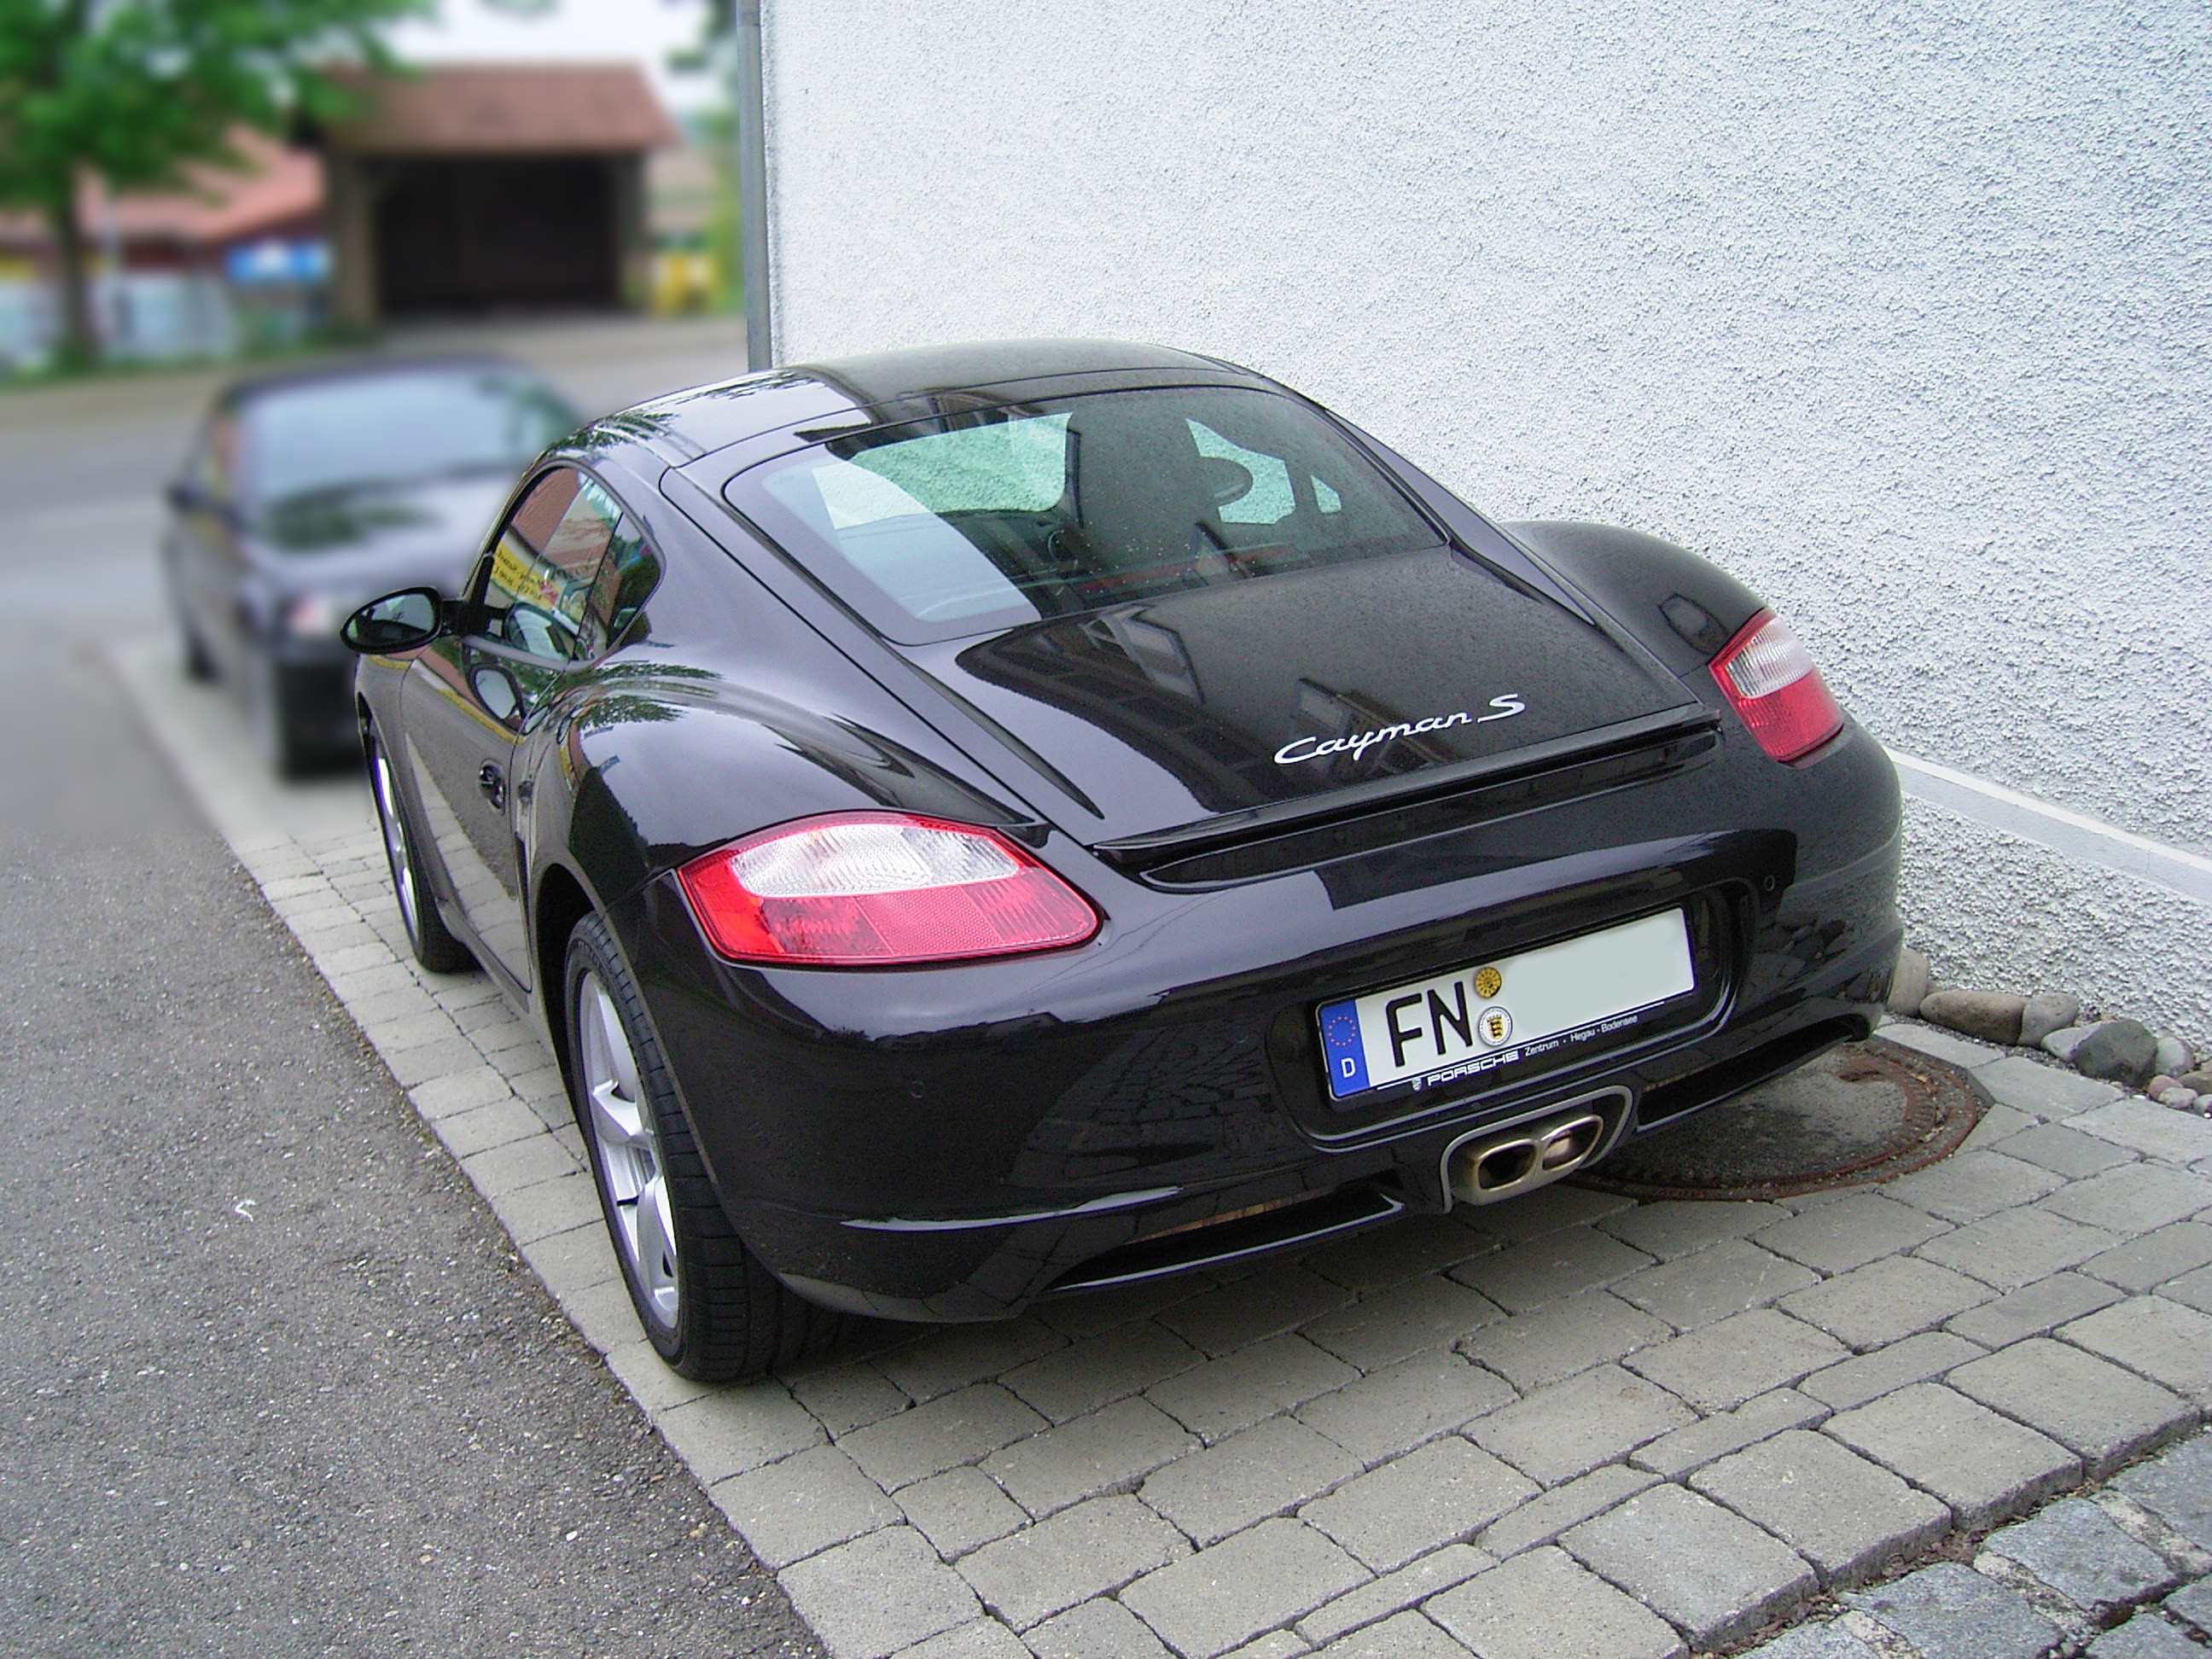 Porsche Cayman (Black) - Back 1